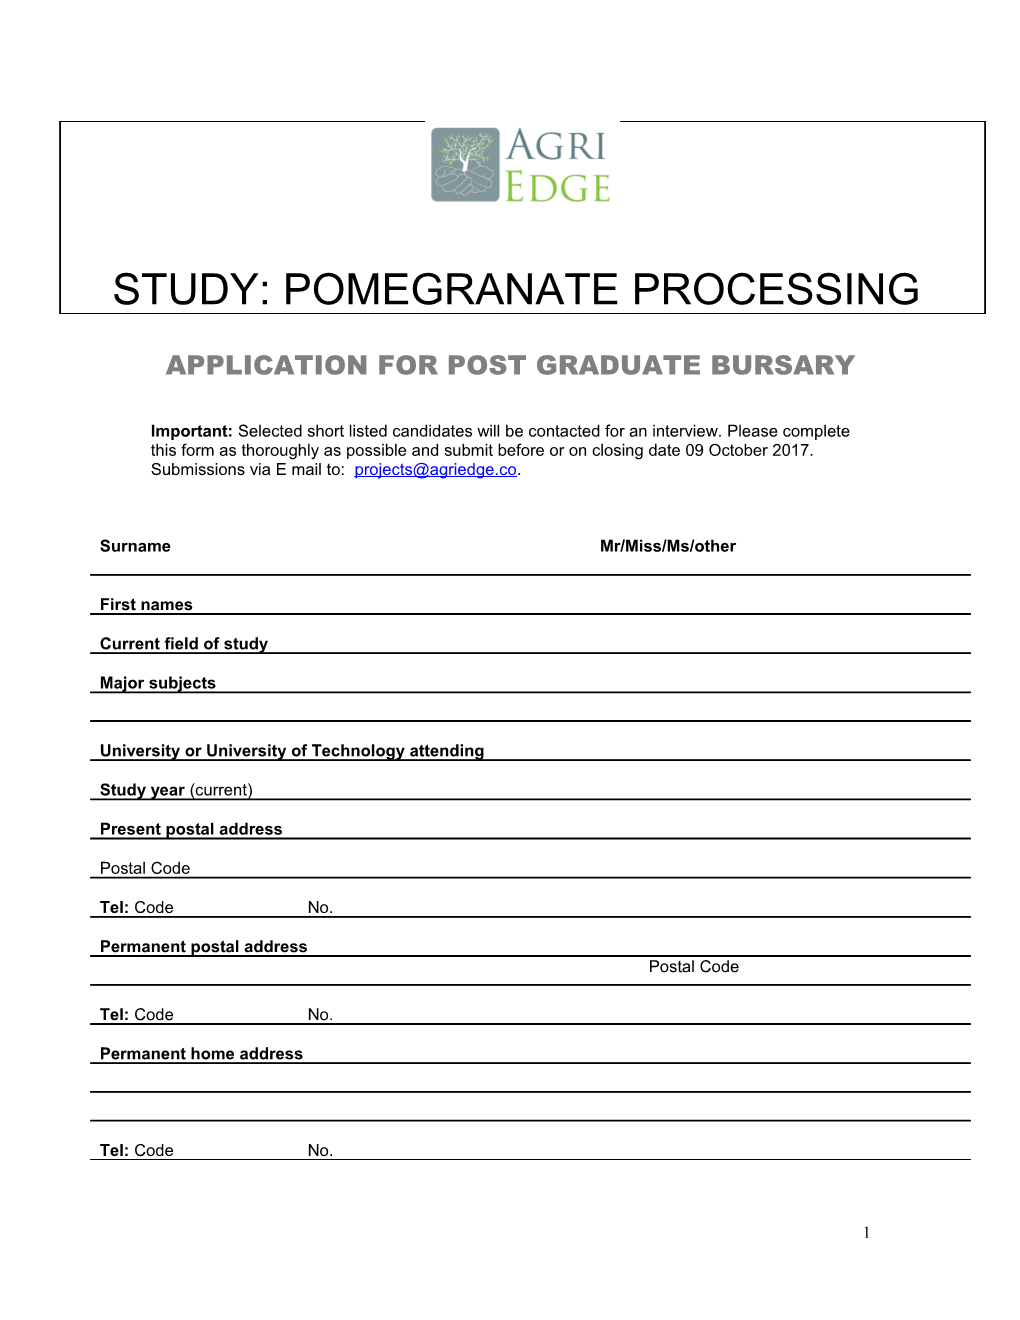 Application for Post Graduate Bursary